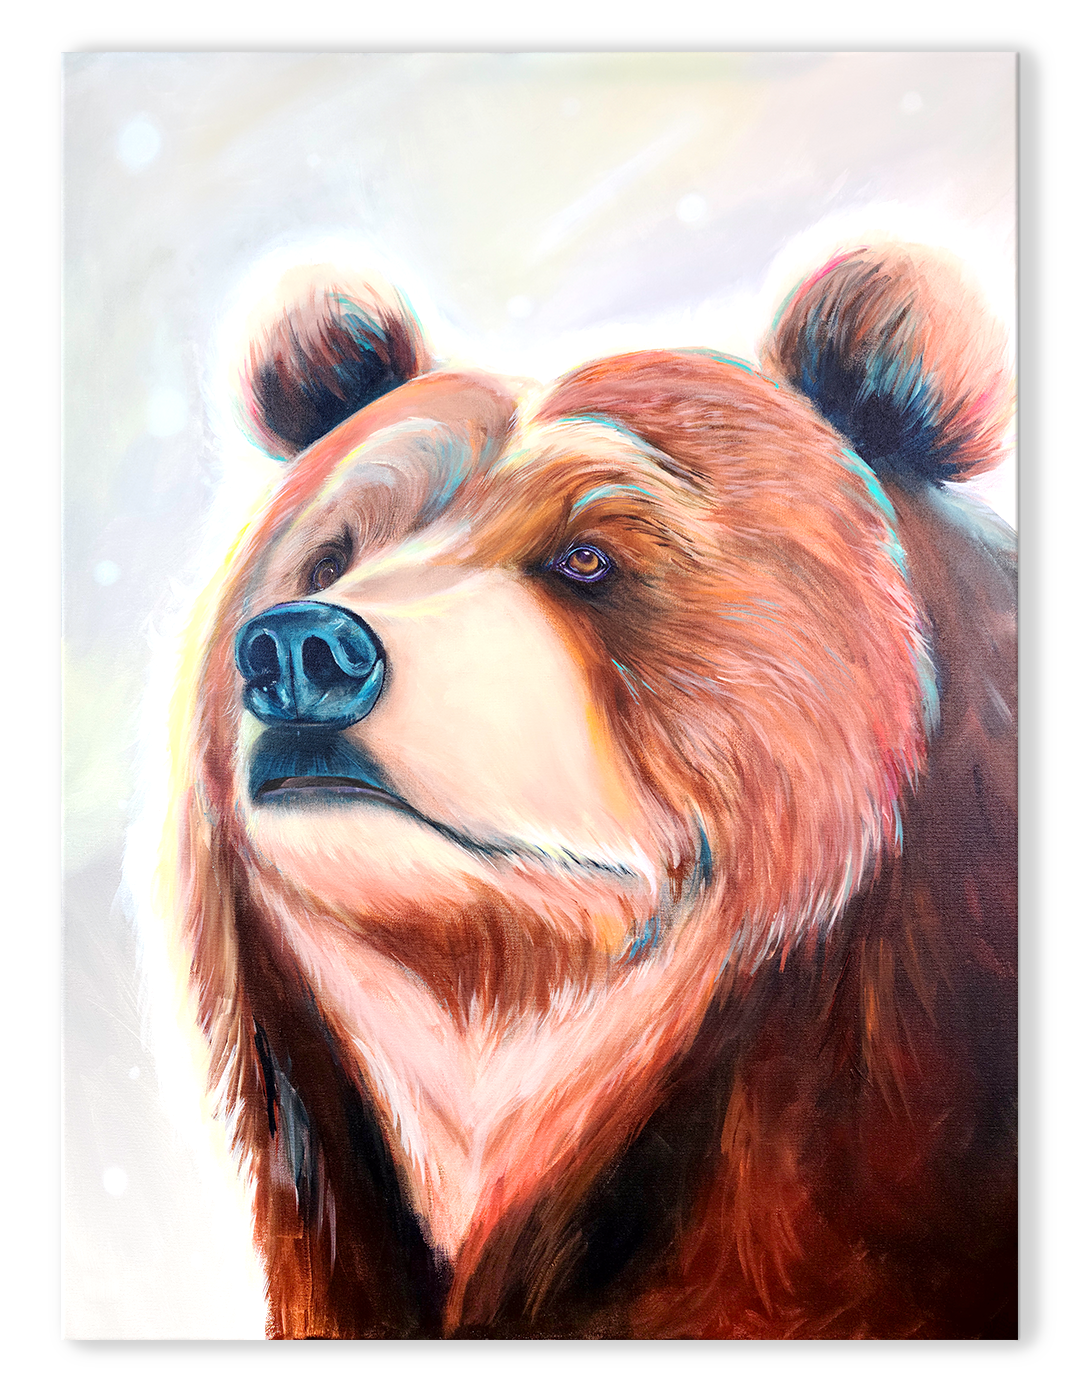 Maya Corona_Dodee the bear-30x40-acrylic on canvas.png